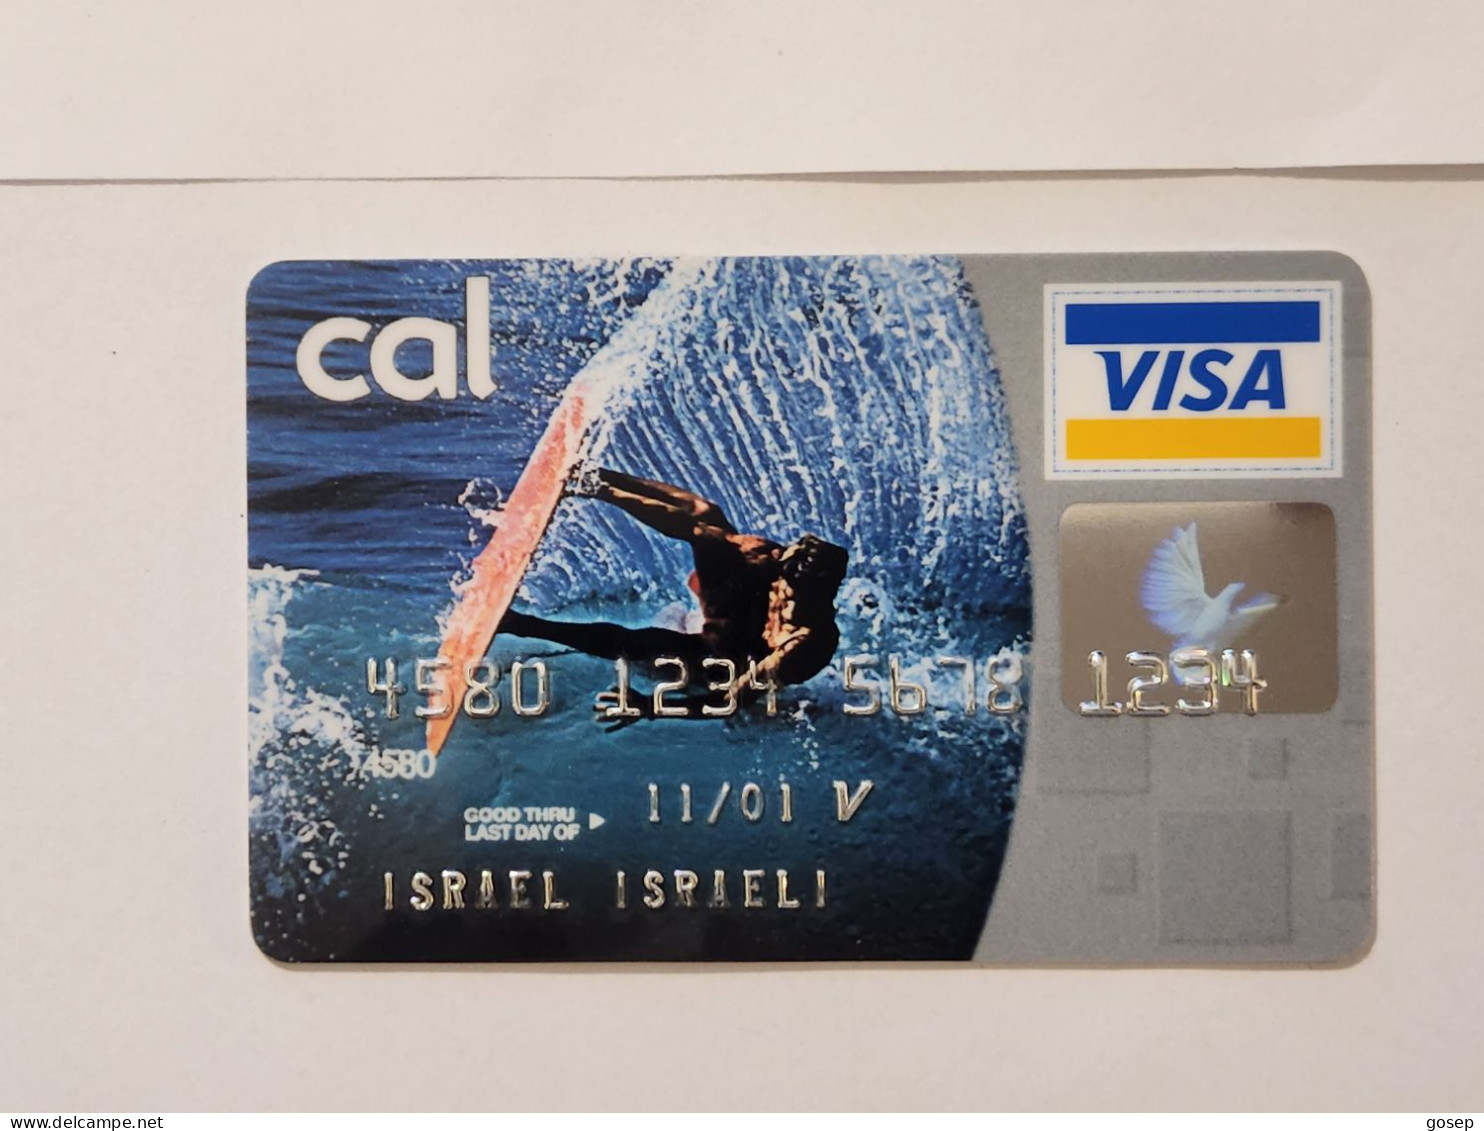 ISRAEL-CALL VISA ELECTRON-(4580-1234-5678-1234)(A Special Rare Experimental Card)-(E)-(01.11.01)-Good Card - Geldkarten (Ablauf Min. 10 Jahre)